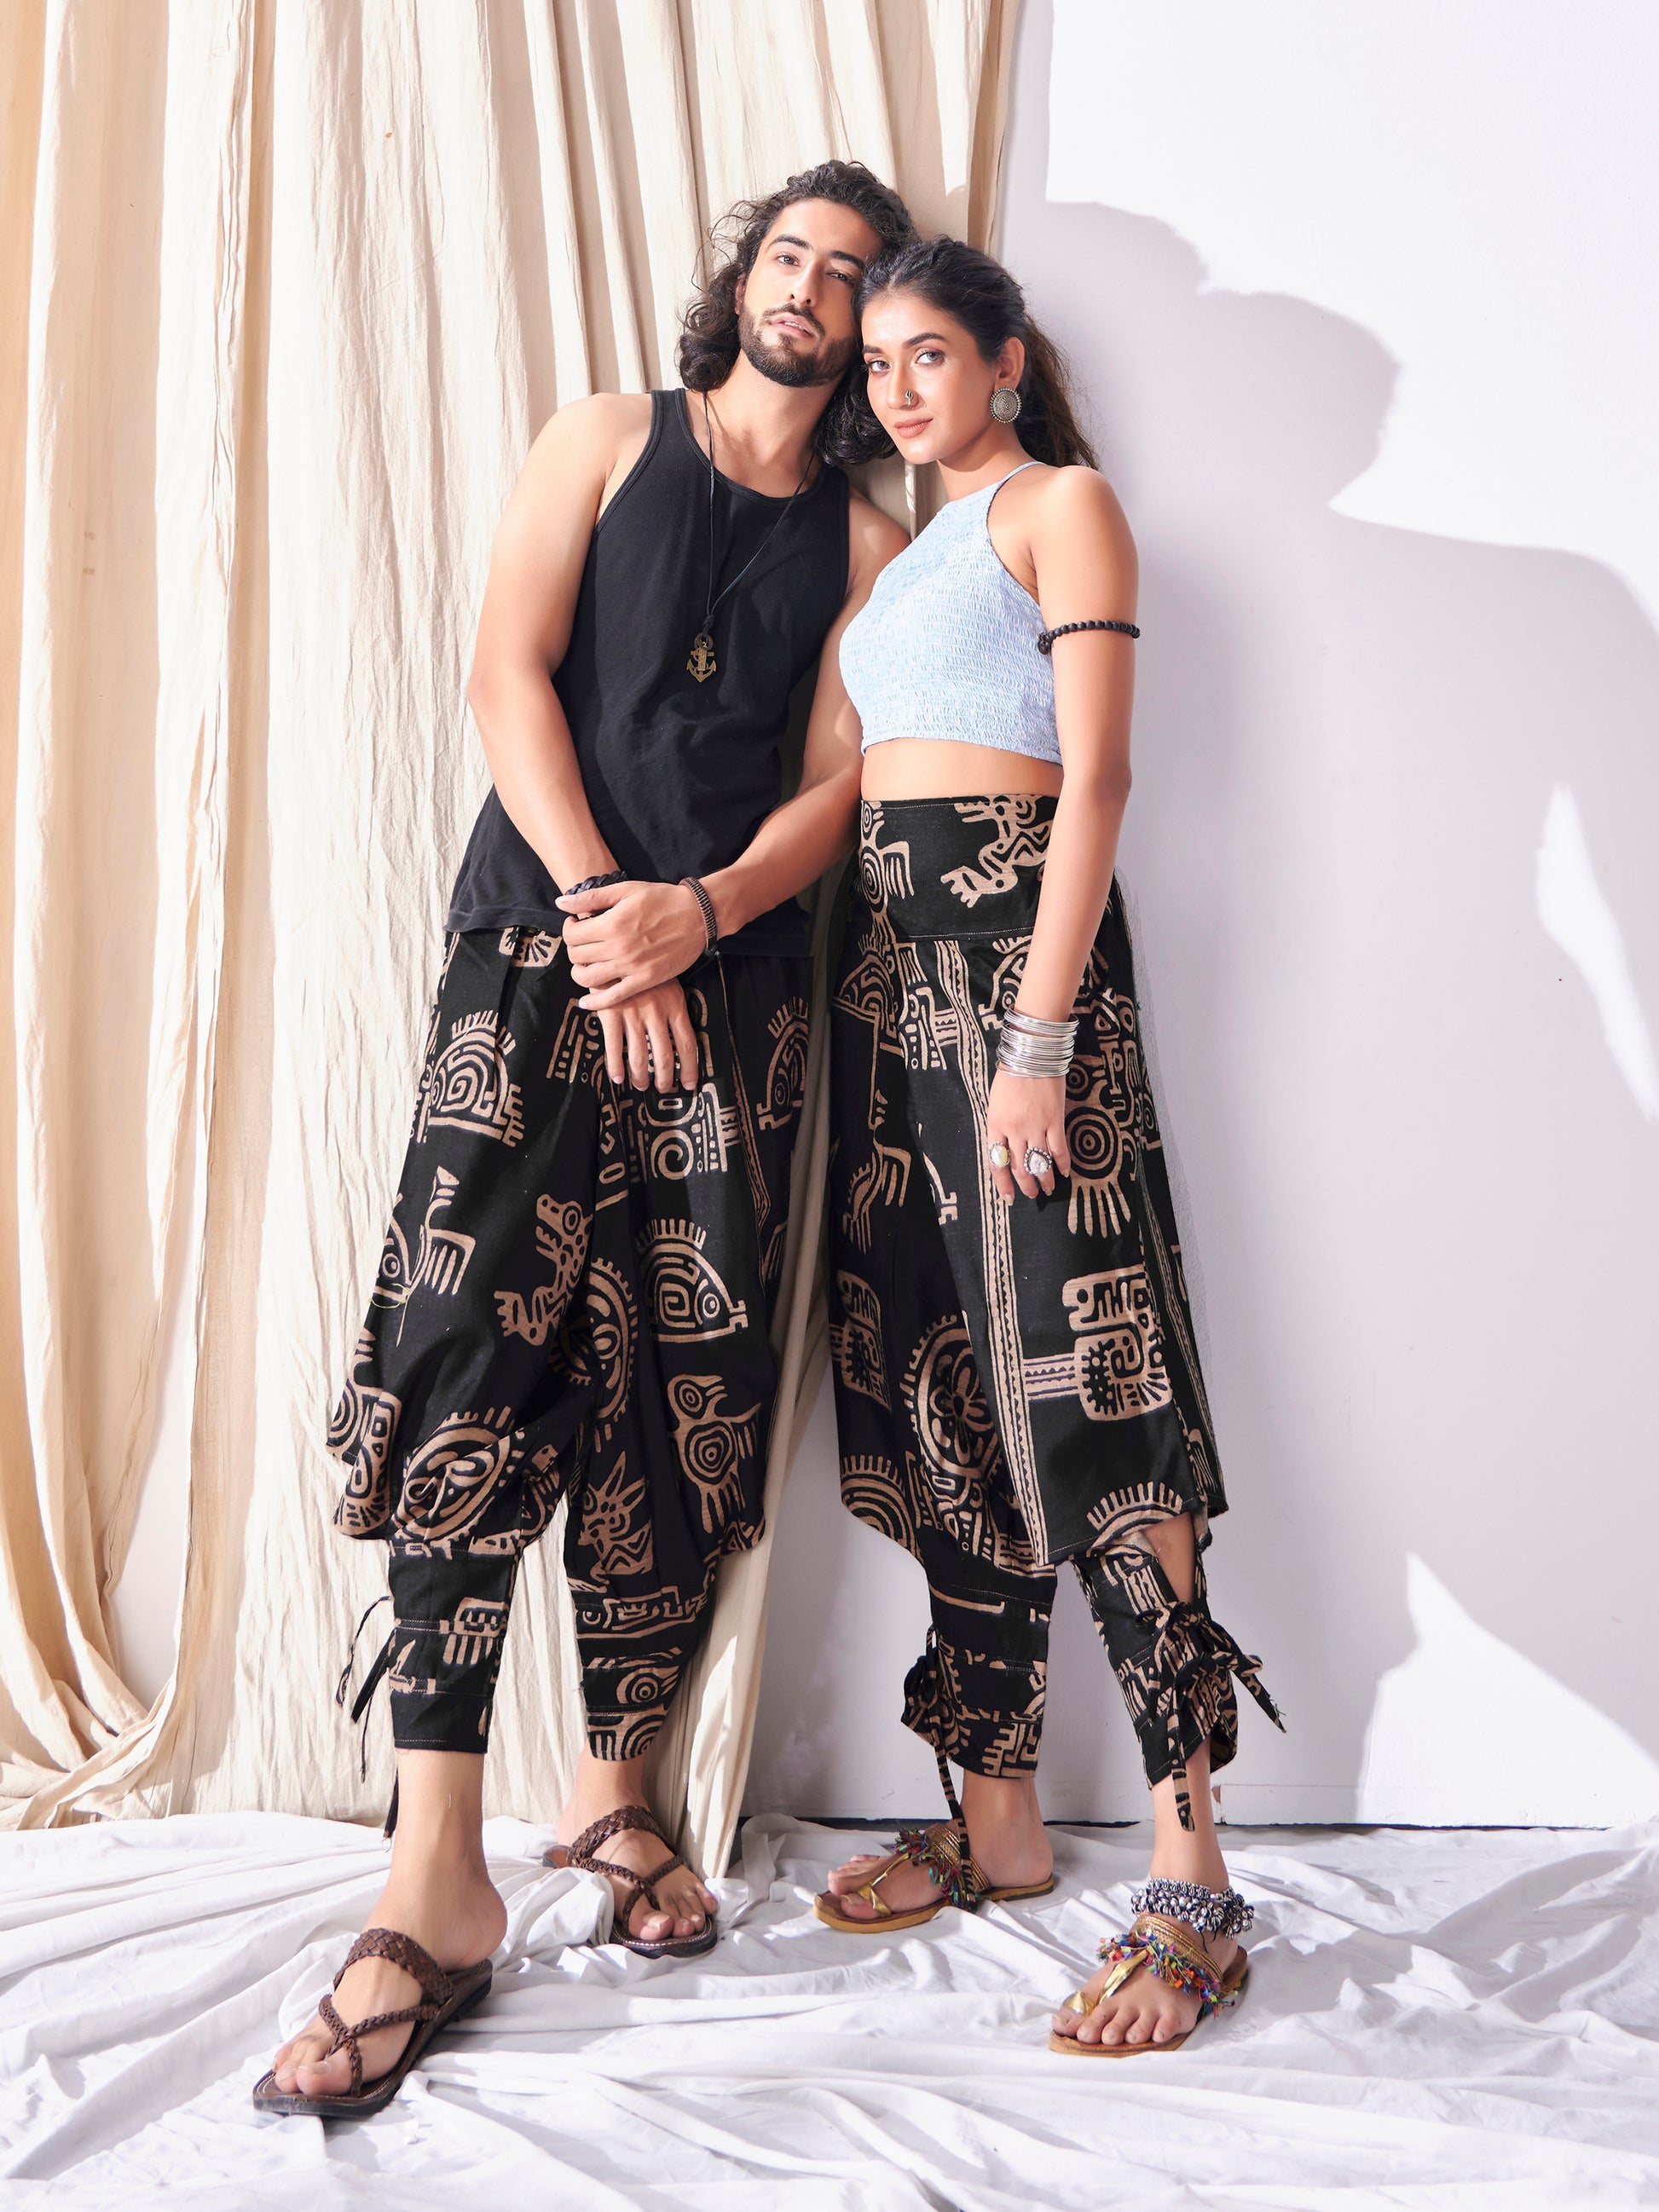 Buy Unisex Couple Baggy Gypsy Hippy Boho Harem Pants For Yoga Dance Travel